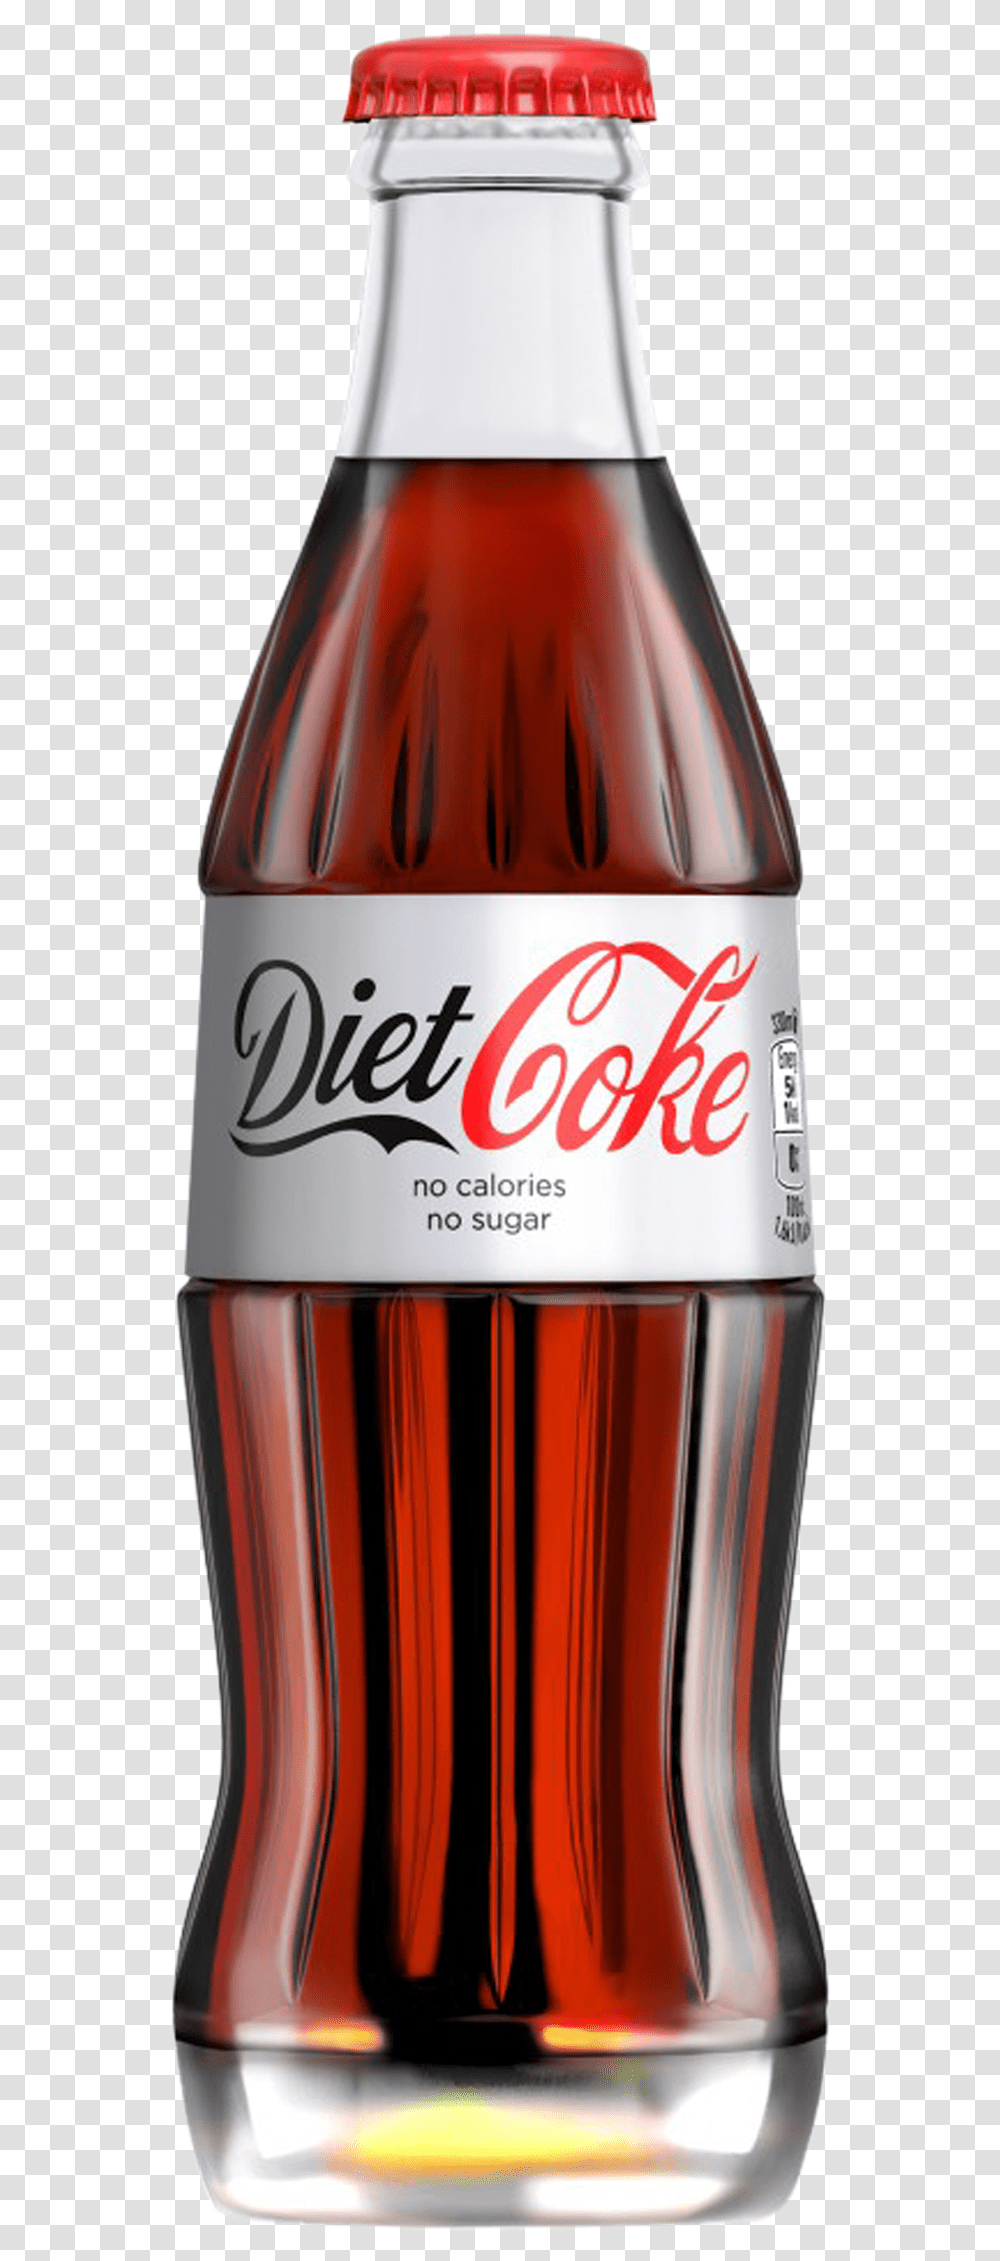 Diet Coke Small Glass Bottle Coca Cola Diet, Beverage, Drink, Soda, Beer Transparent Png